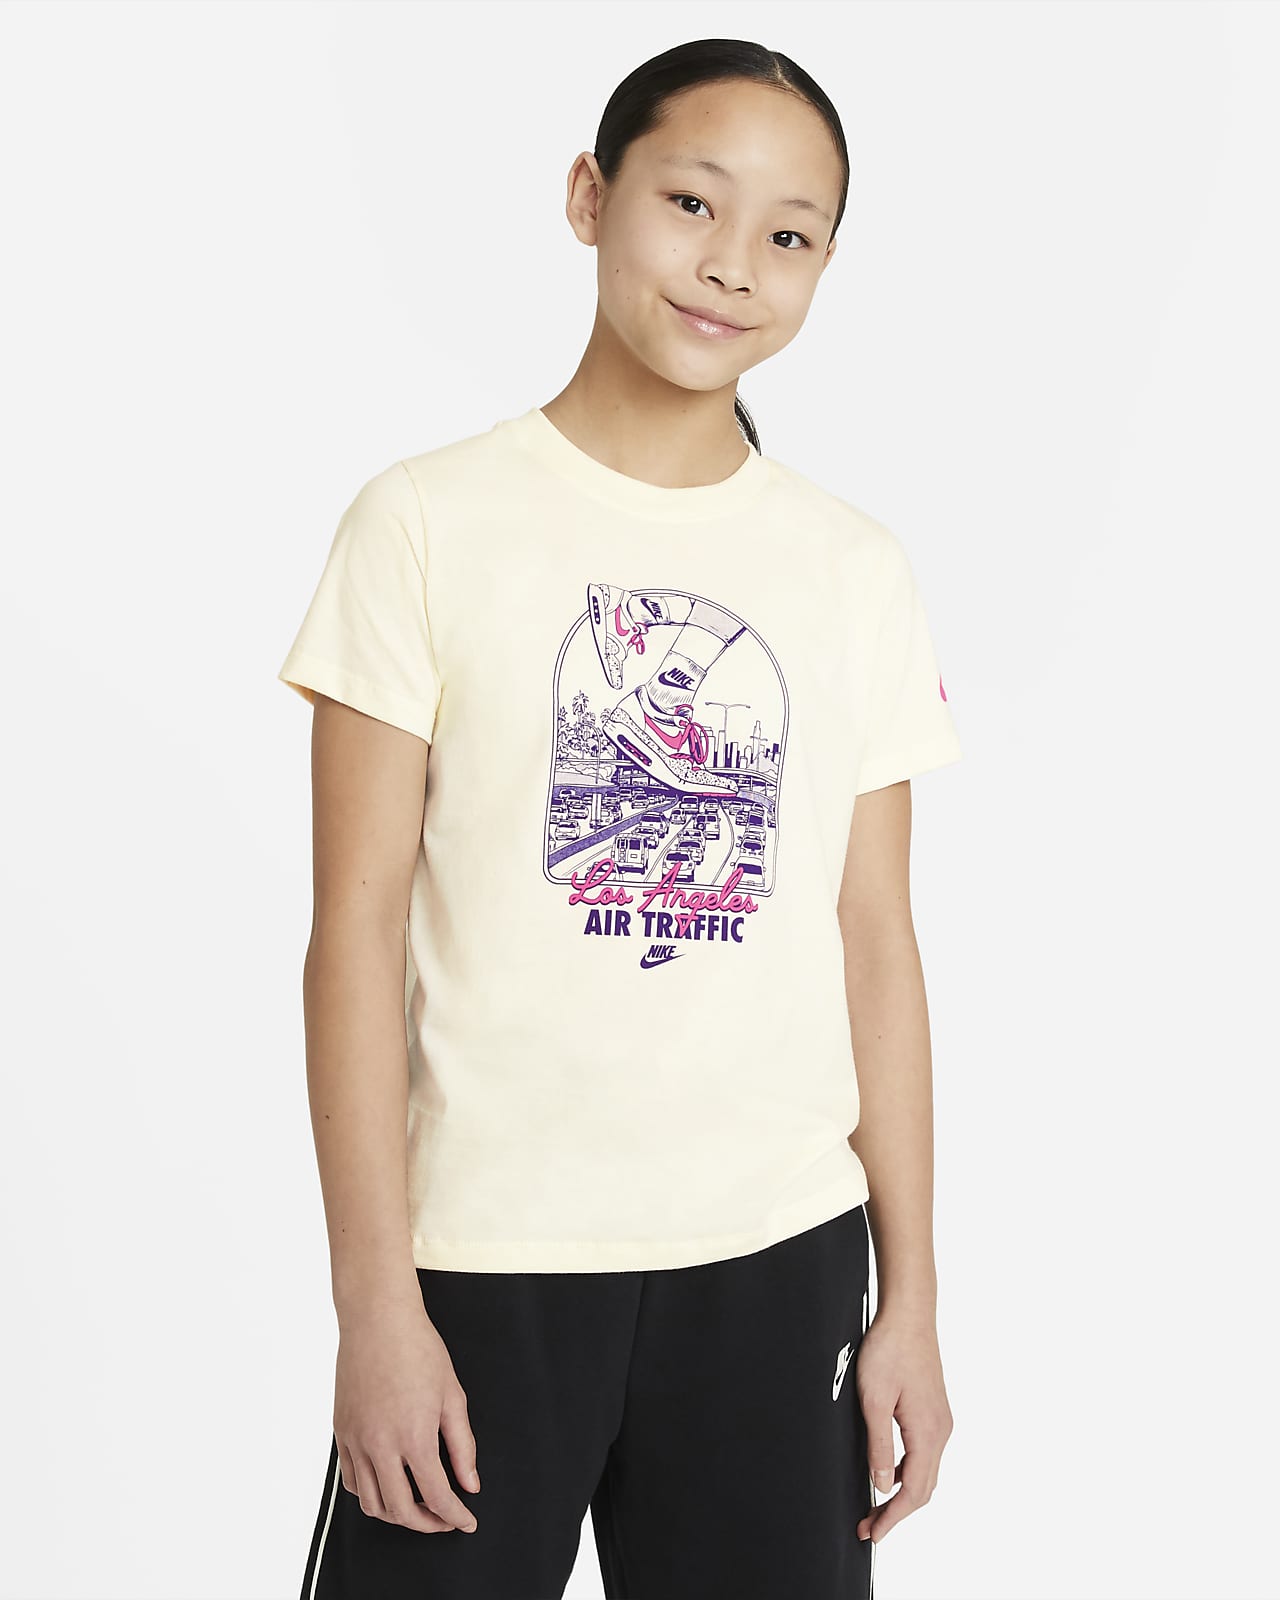 Nike Sportswear Kids' (Girls') Nike.com